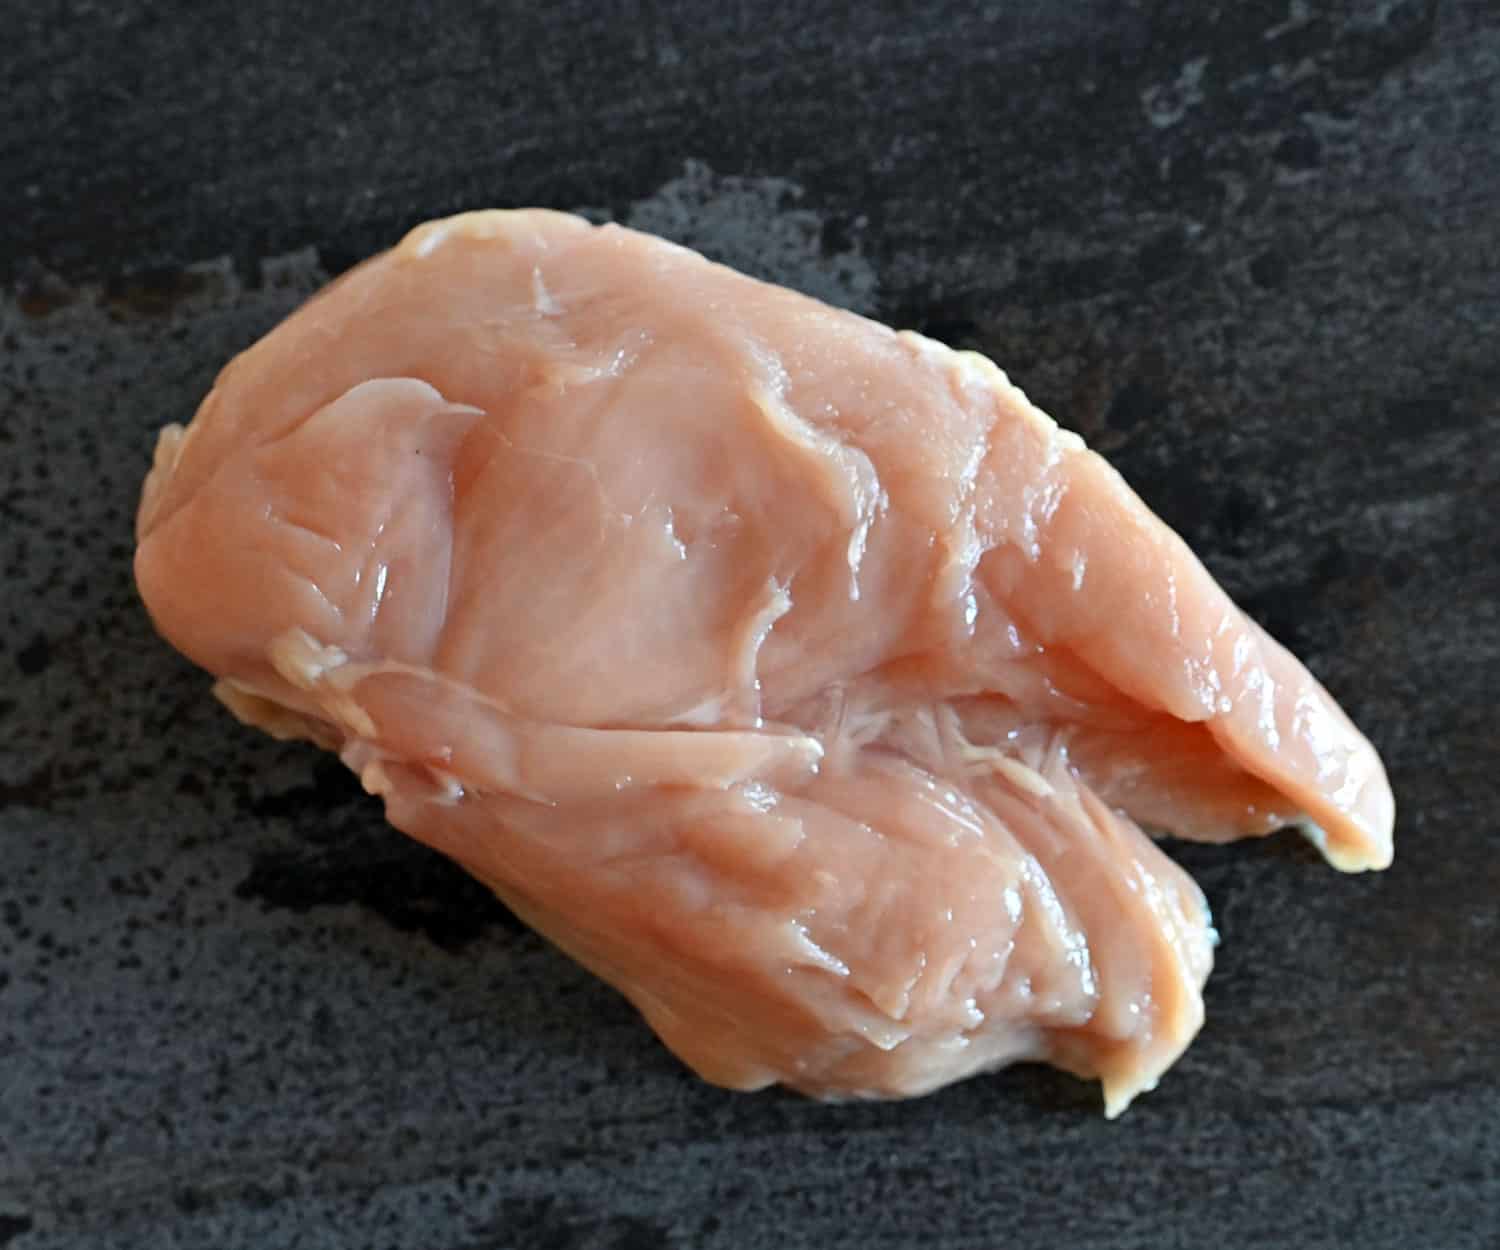 chicken breast, showing tender meat